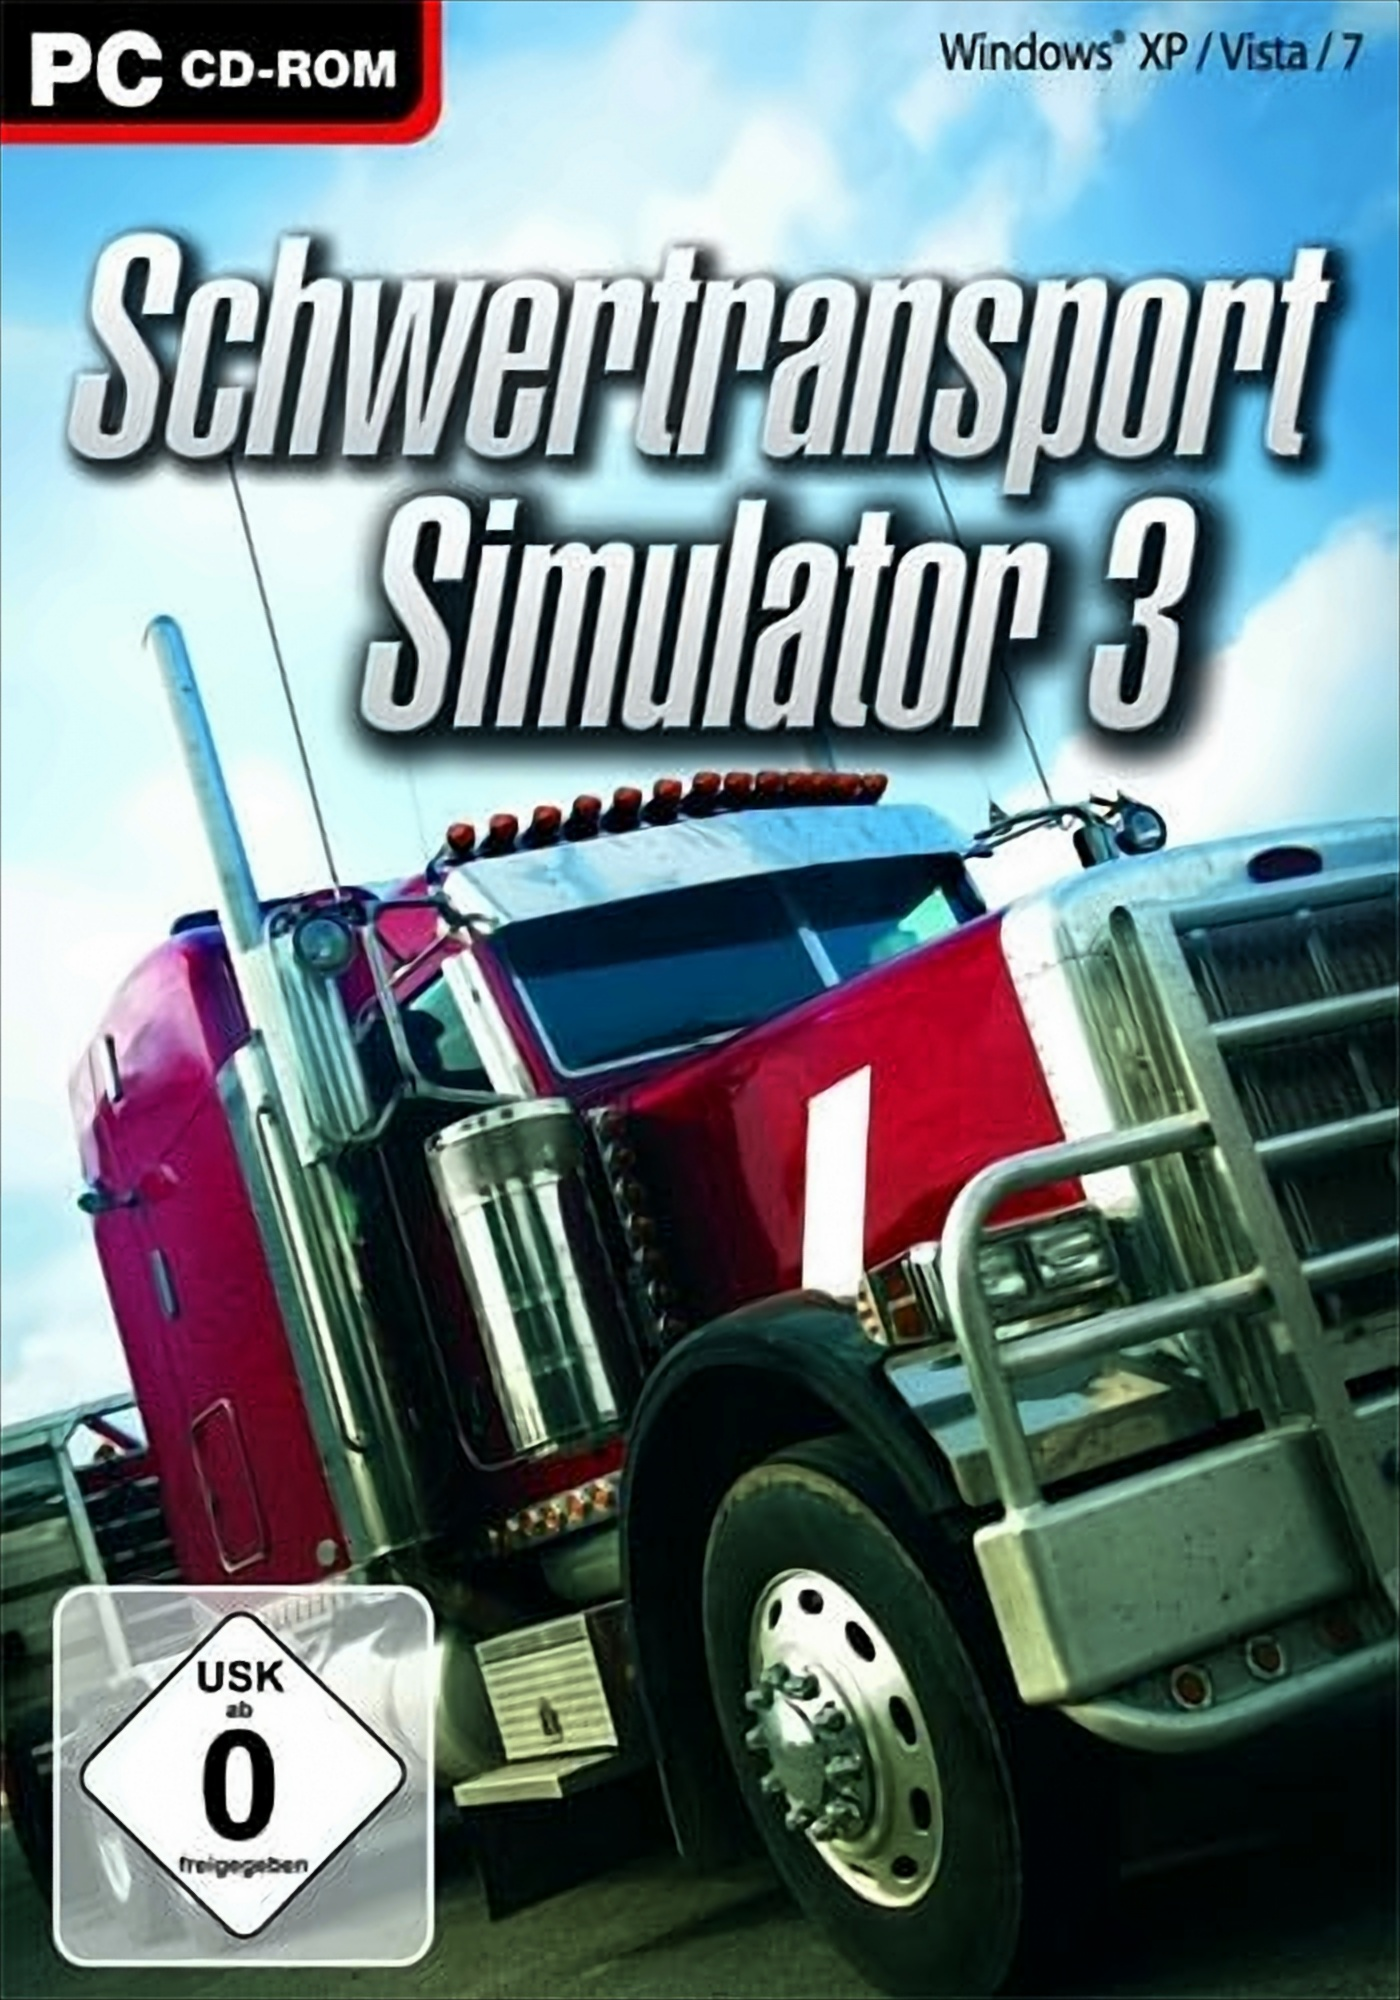 Schwertransport Simulator - [PC] 3